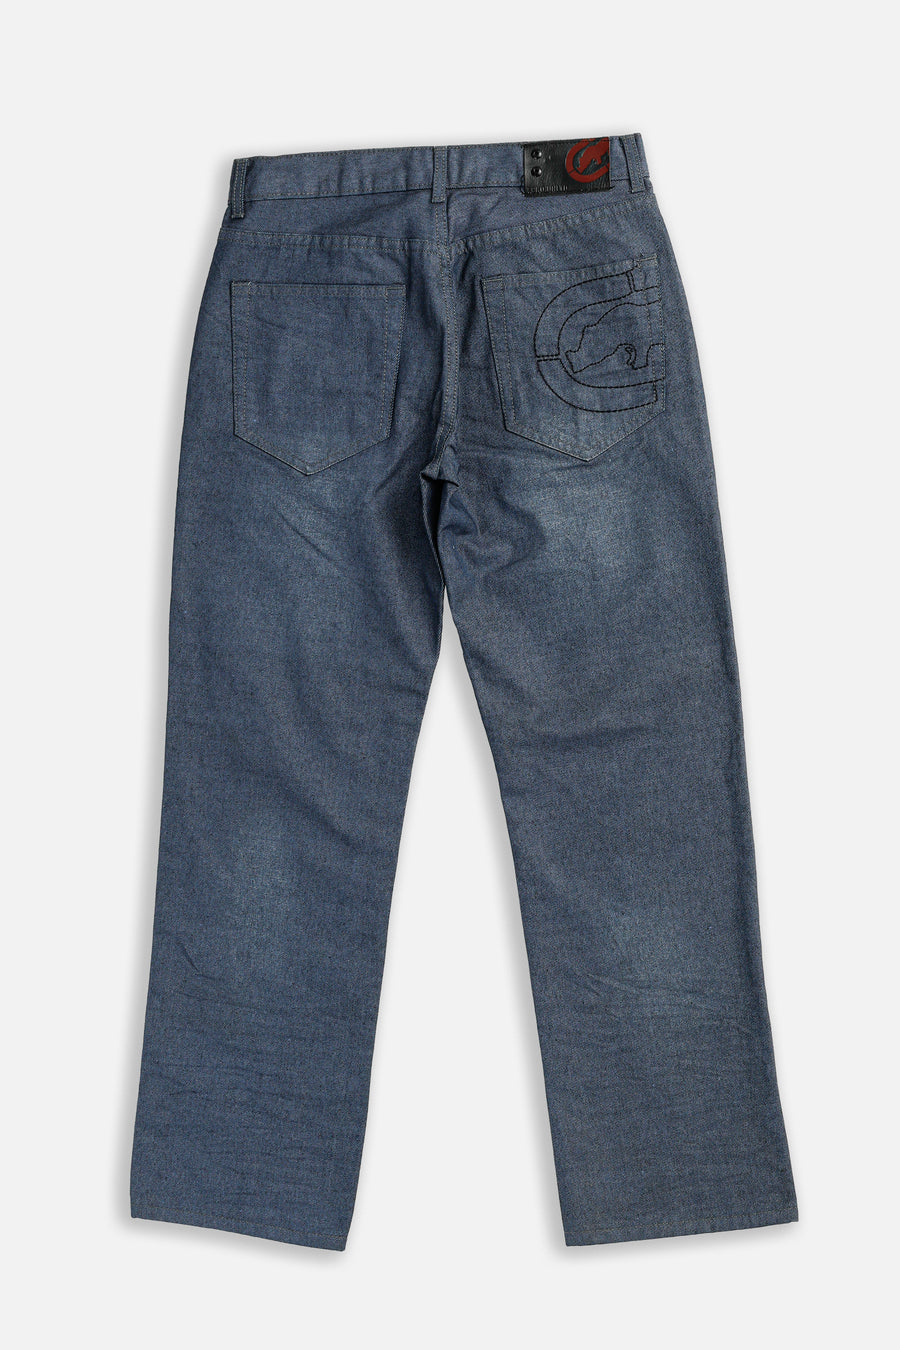 Vintage Ecko Denim Pants - W30